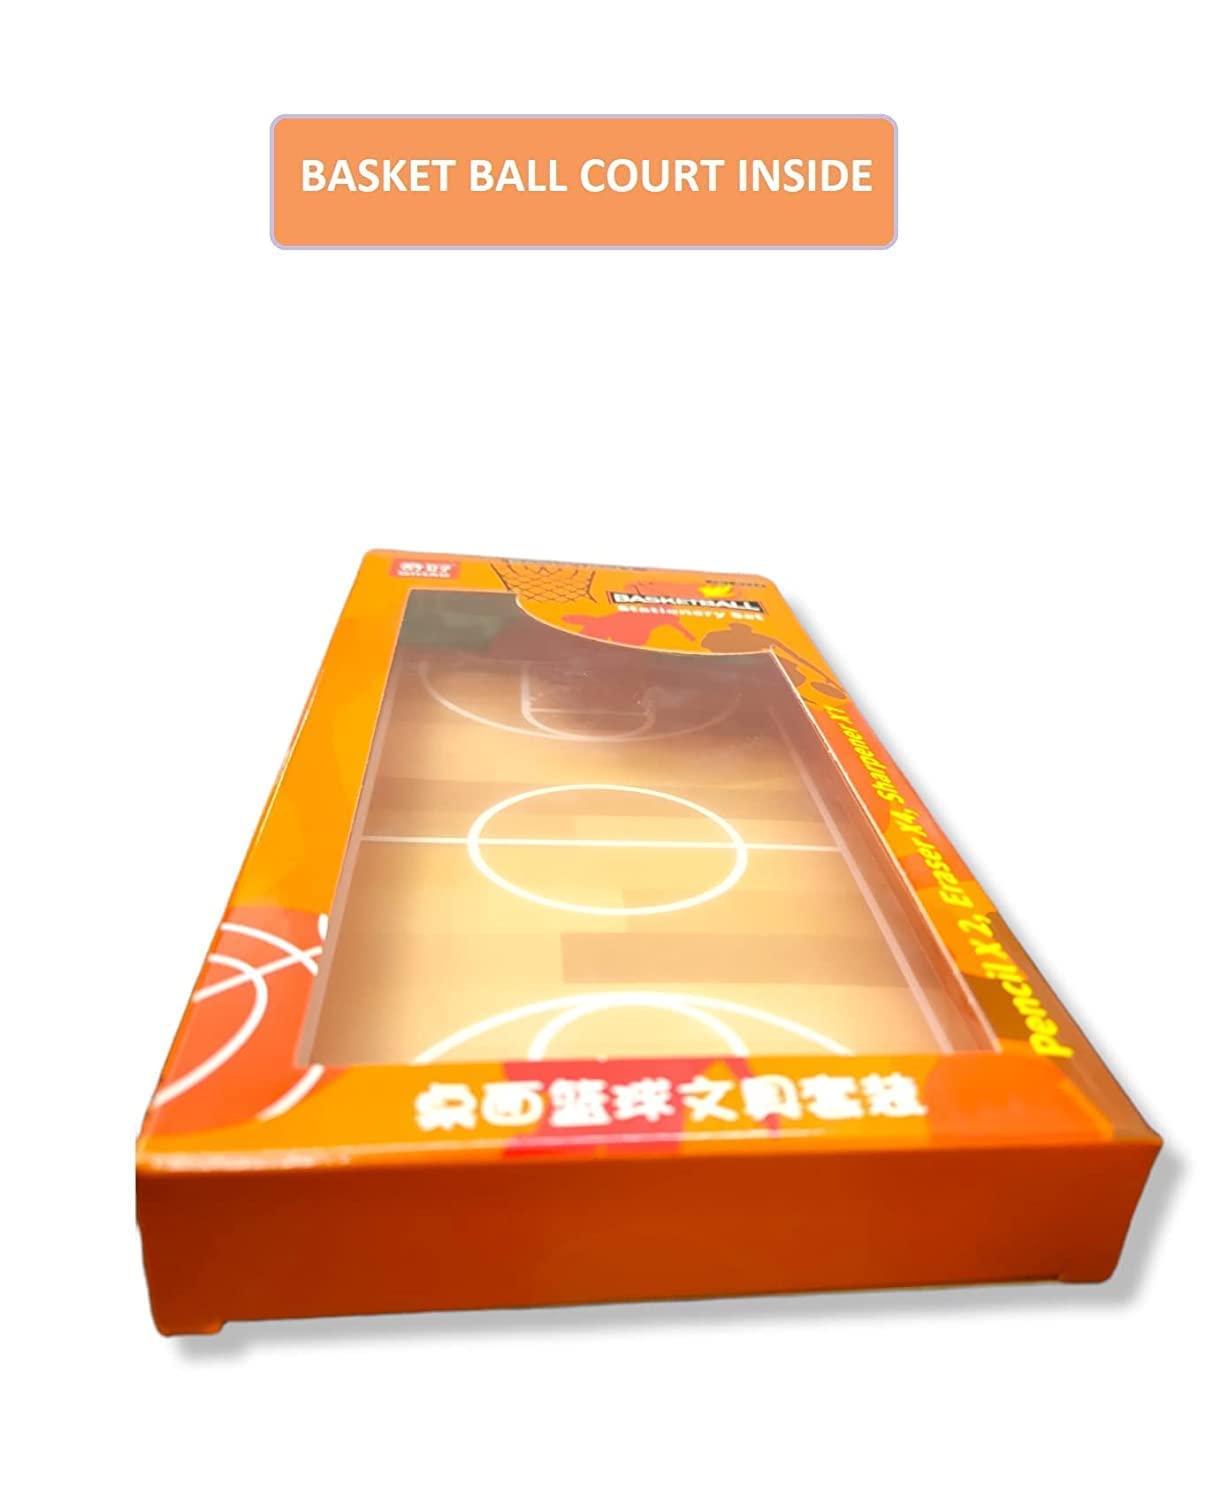 Stationary Kit – Basket Ball Theme Stationary Set for Kids